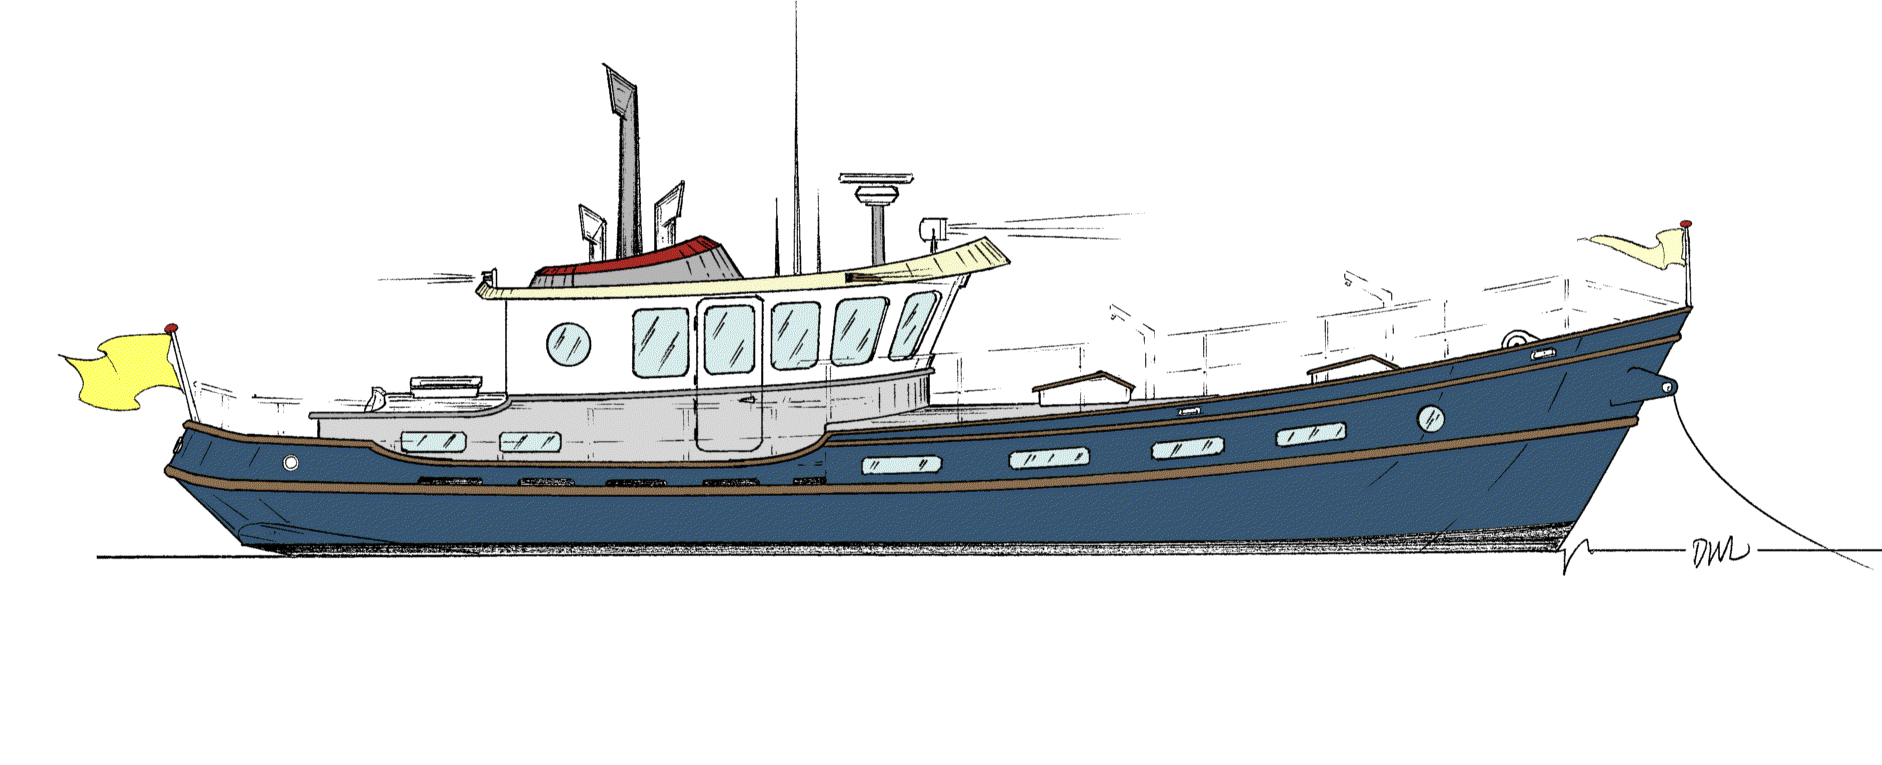 Greatheart 54 - A Motor Yacht for Voyaging - Kasten Marine Design, Inc 